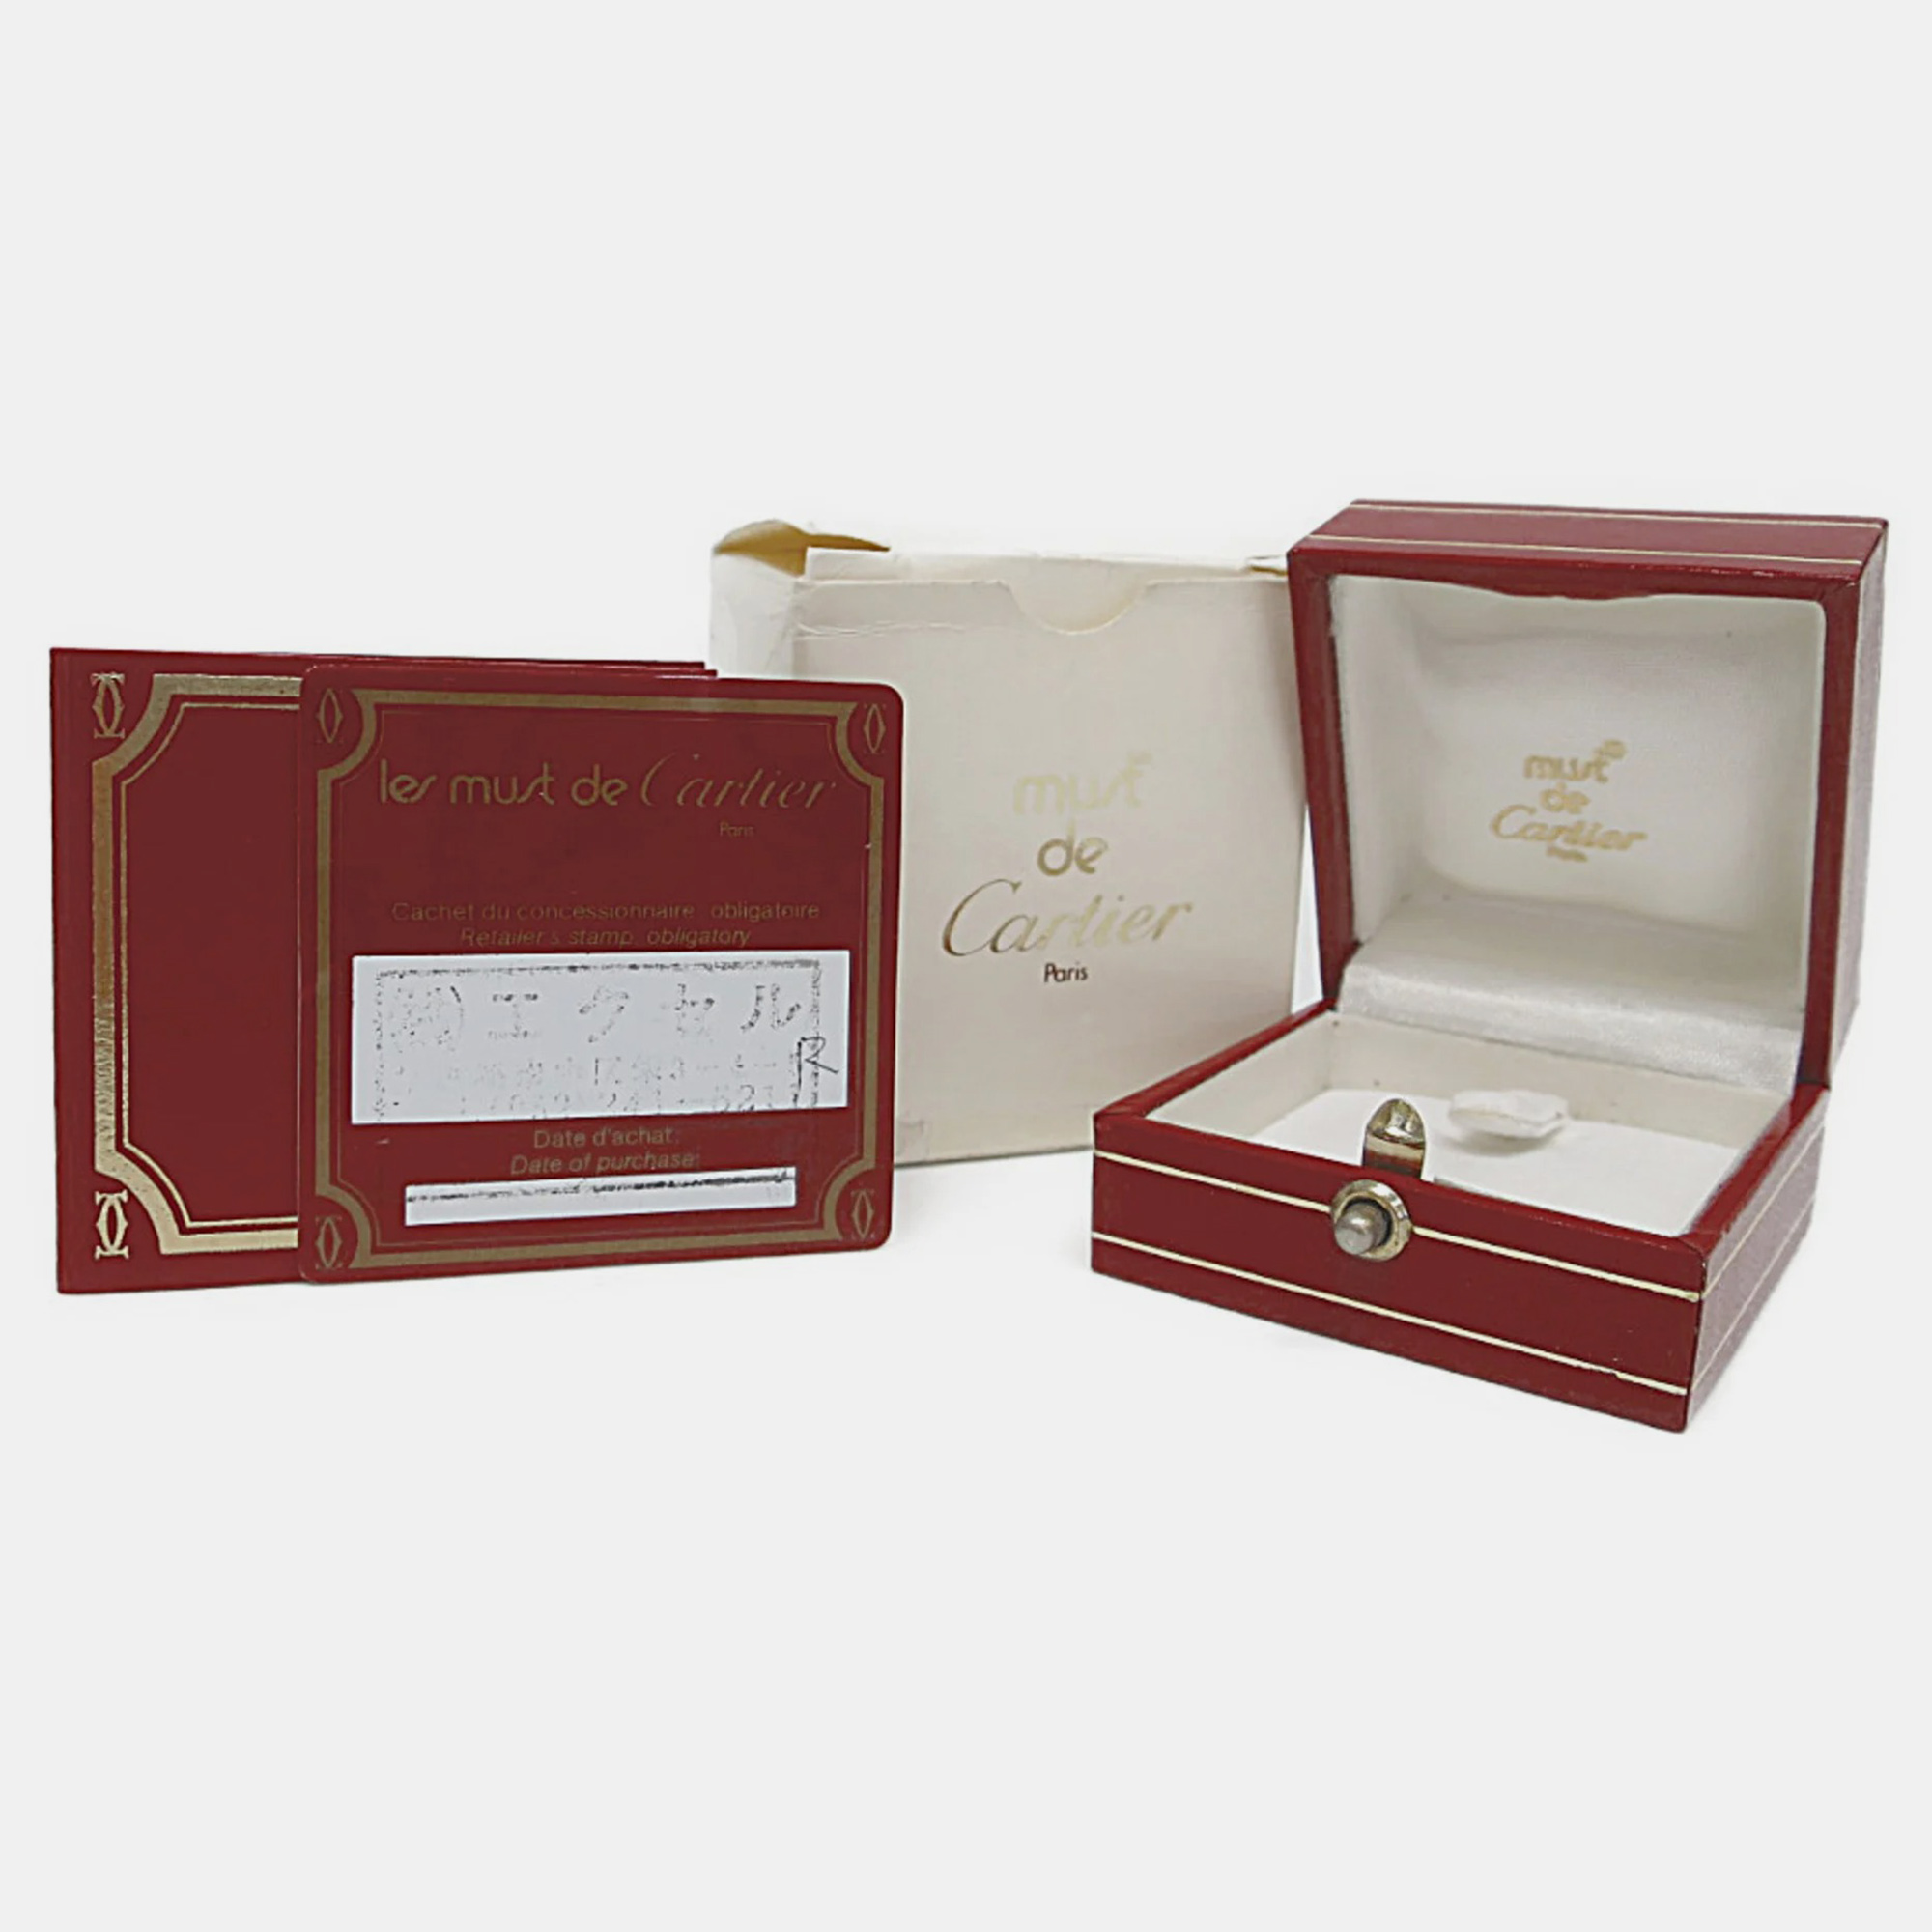 Cartier Les Must De Cartier 18K Yellow Rose And White Gold Ring EU 48